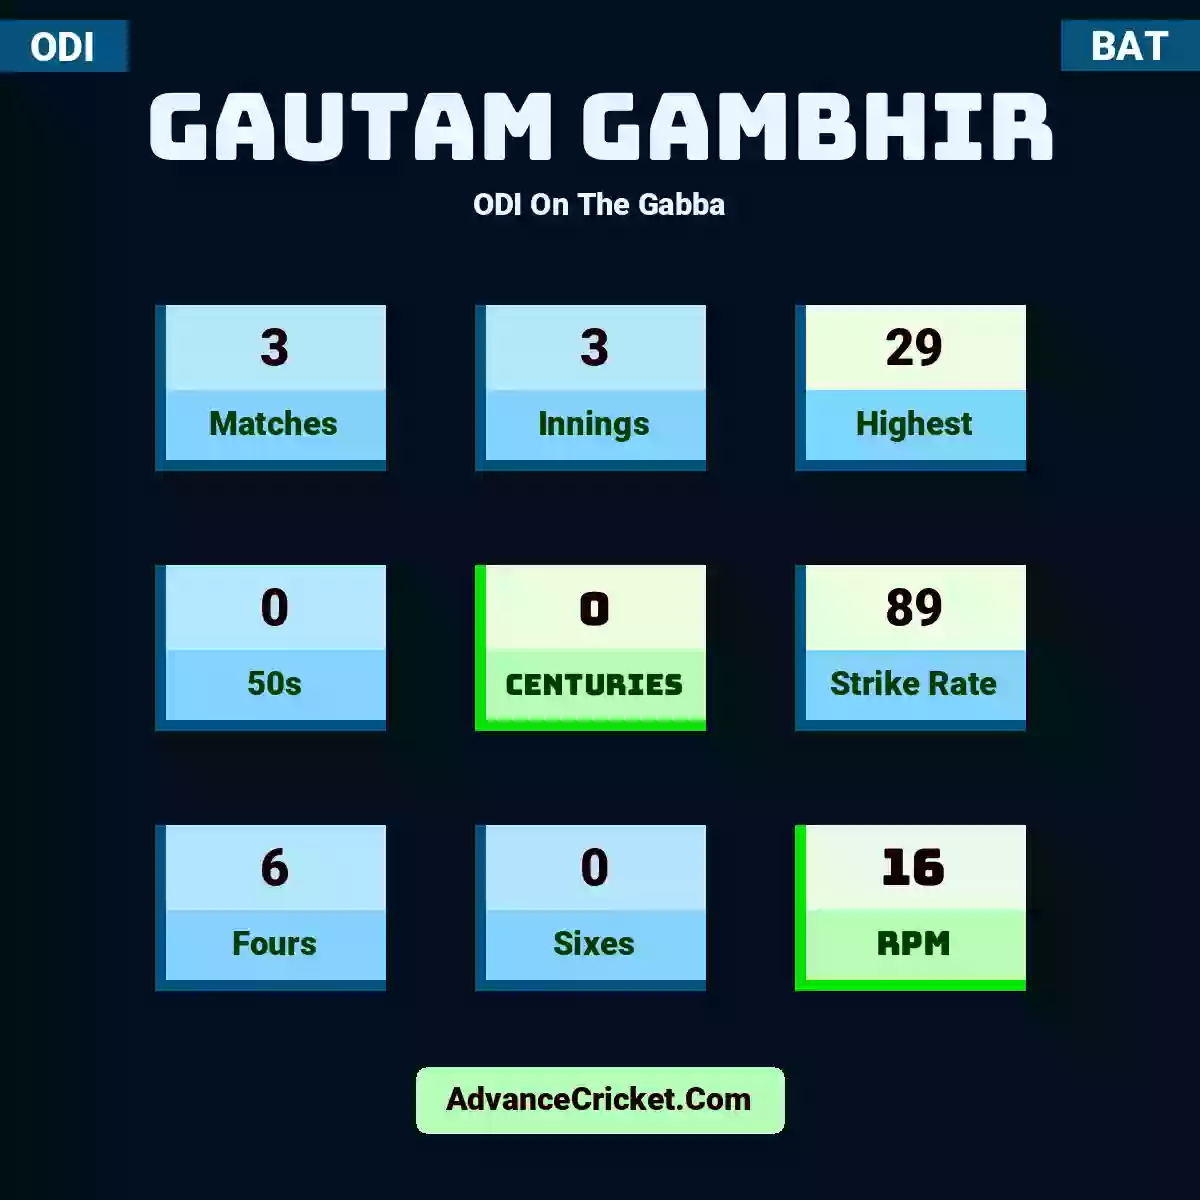 Gautam Gambhir ODI  On The Gabba, Gautam Gambhir played 3 matches, scored 29 runs as highest, 0 half-centuries, and 0 centuries, with a strike rate of 89. G.Gambhir hit 6 fours and 0 sixes, with an RPM of 16.